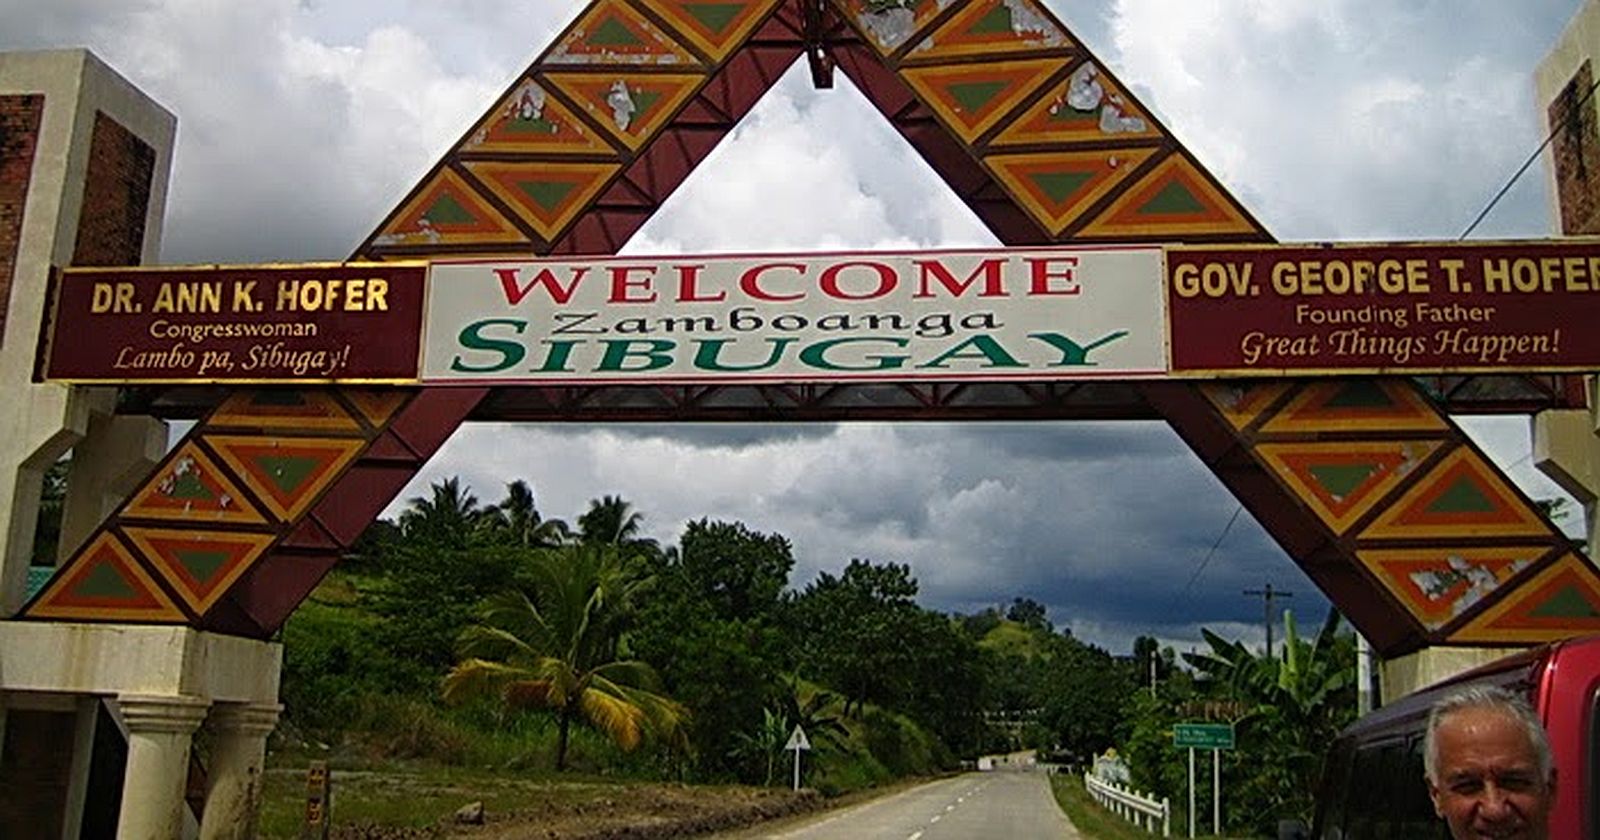 PHILIPPINEN REISEN - ORTE - MINDANAO - Touristische Beschreibung der Provinz Zamboanga Sibugay